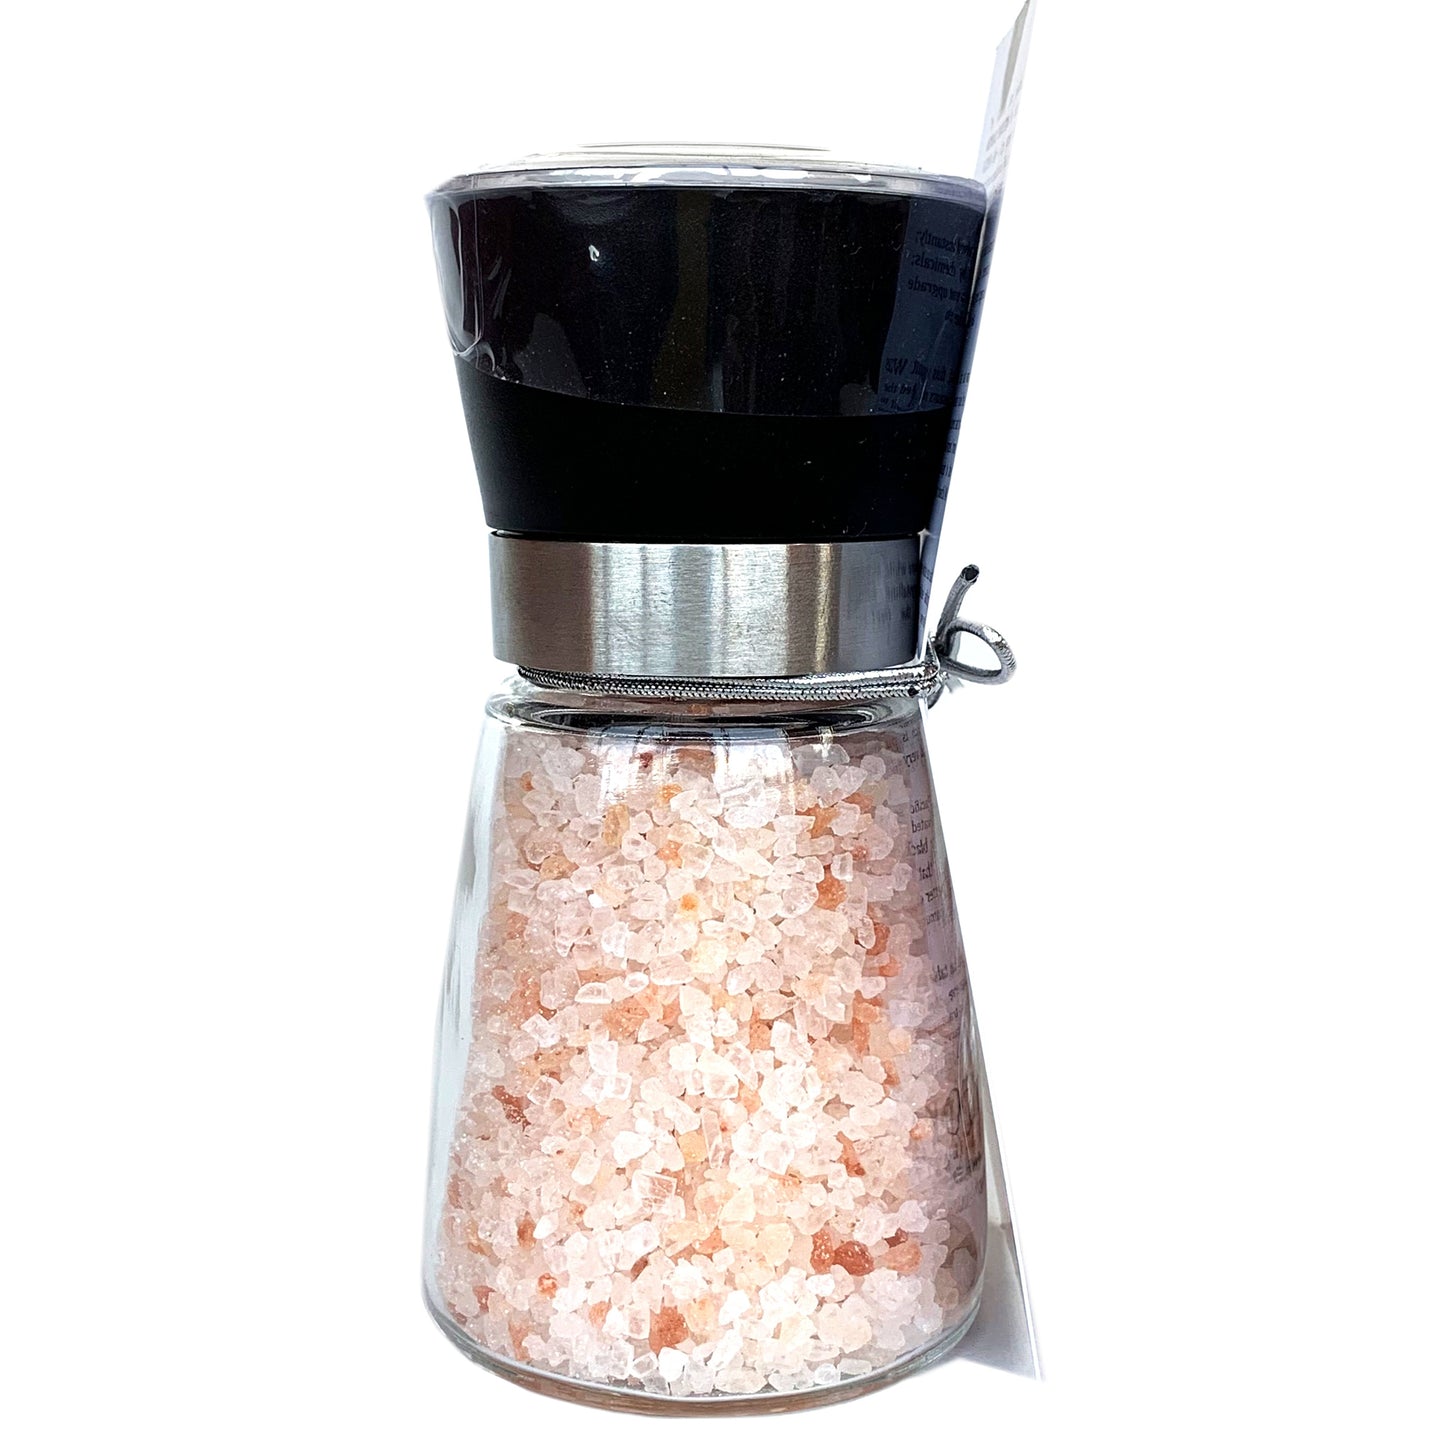 HIMALAYAN PINK coarse grain sea salt